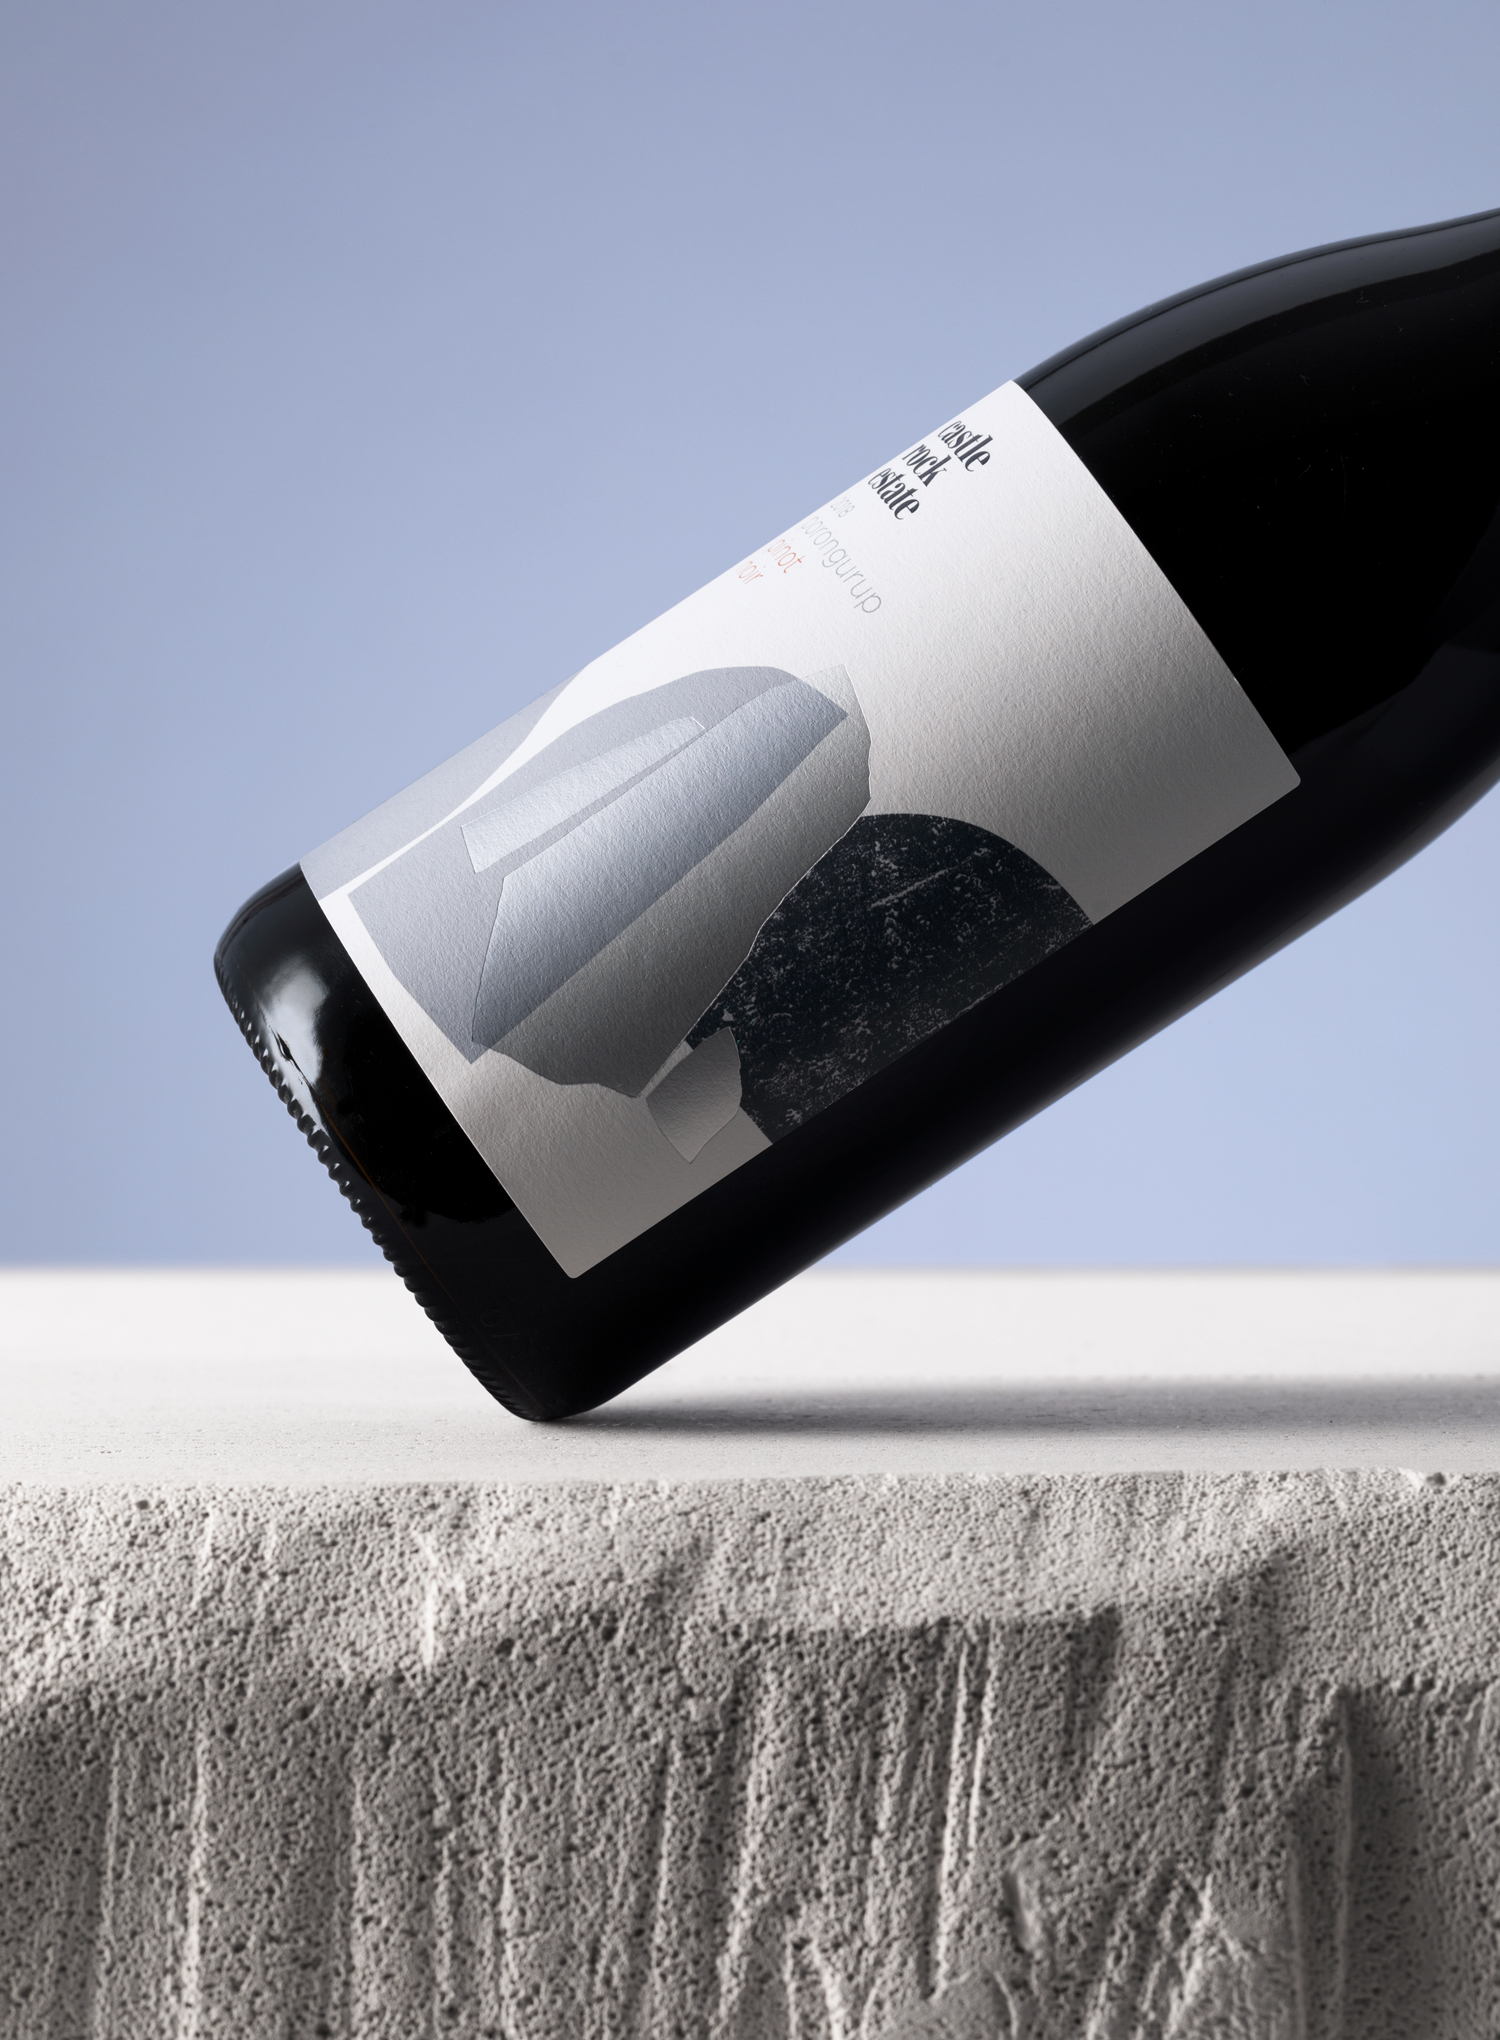 Castle Rock Estate's Wine Labels Are a Work of Art | Dieline - Design ...